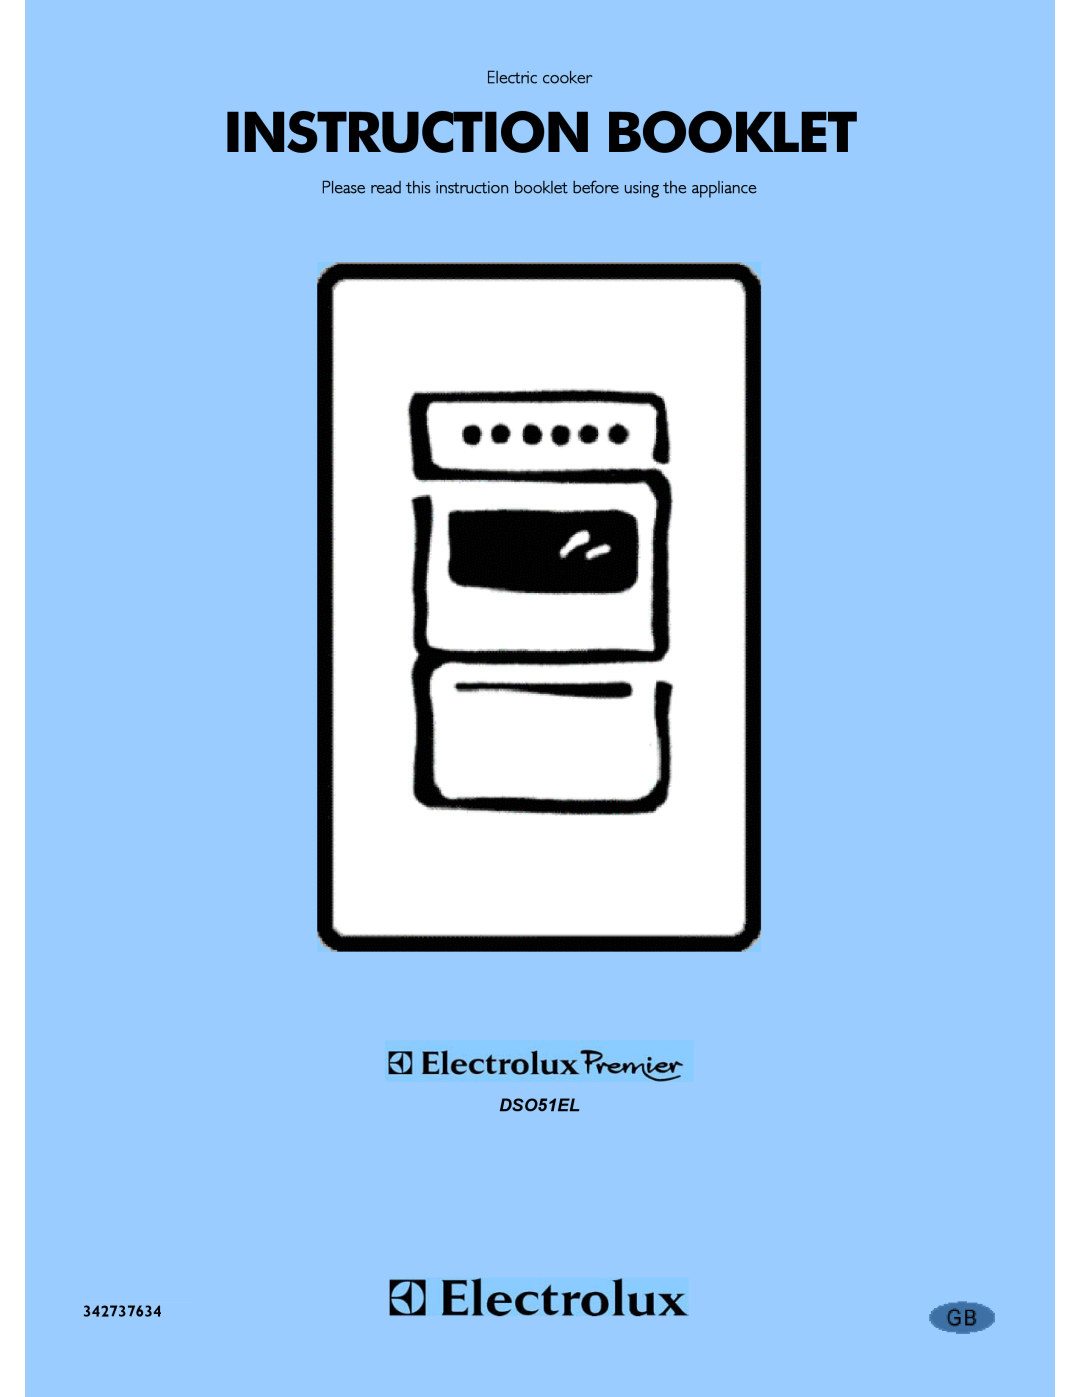 Electrolux DSO51EL manual Instruction Booklet, Electric cooker, 342737634 